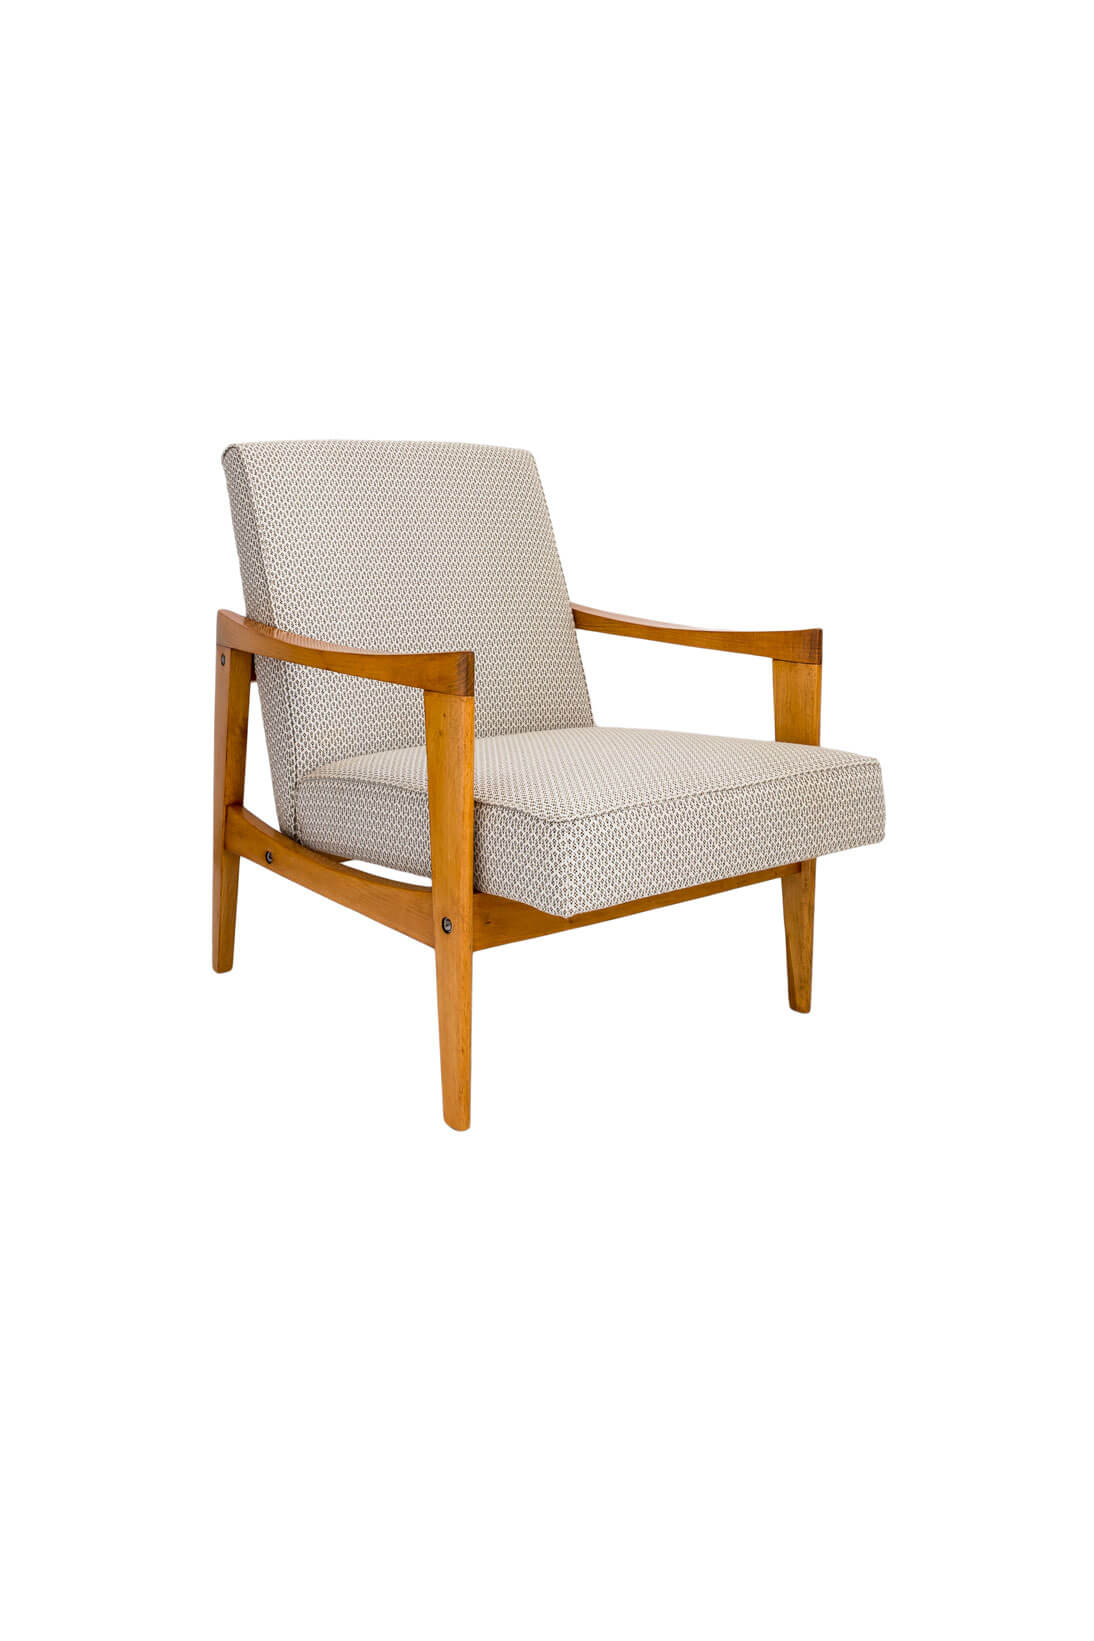 Polish mid-century modern armchair designed by Cz. Knothe